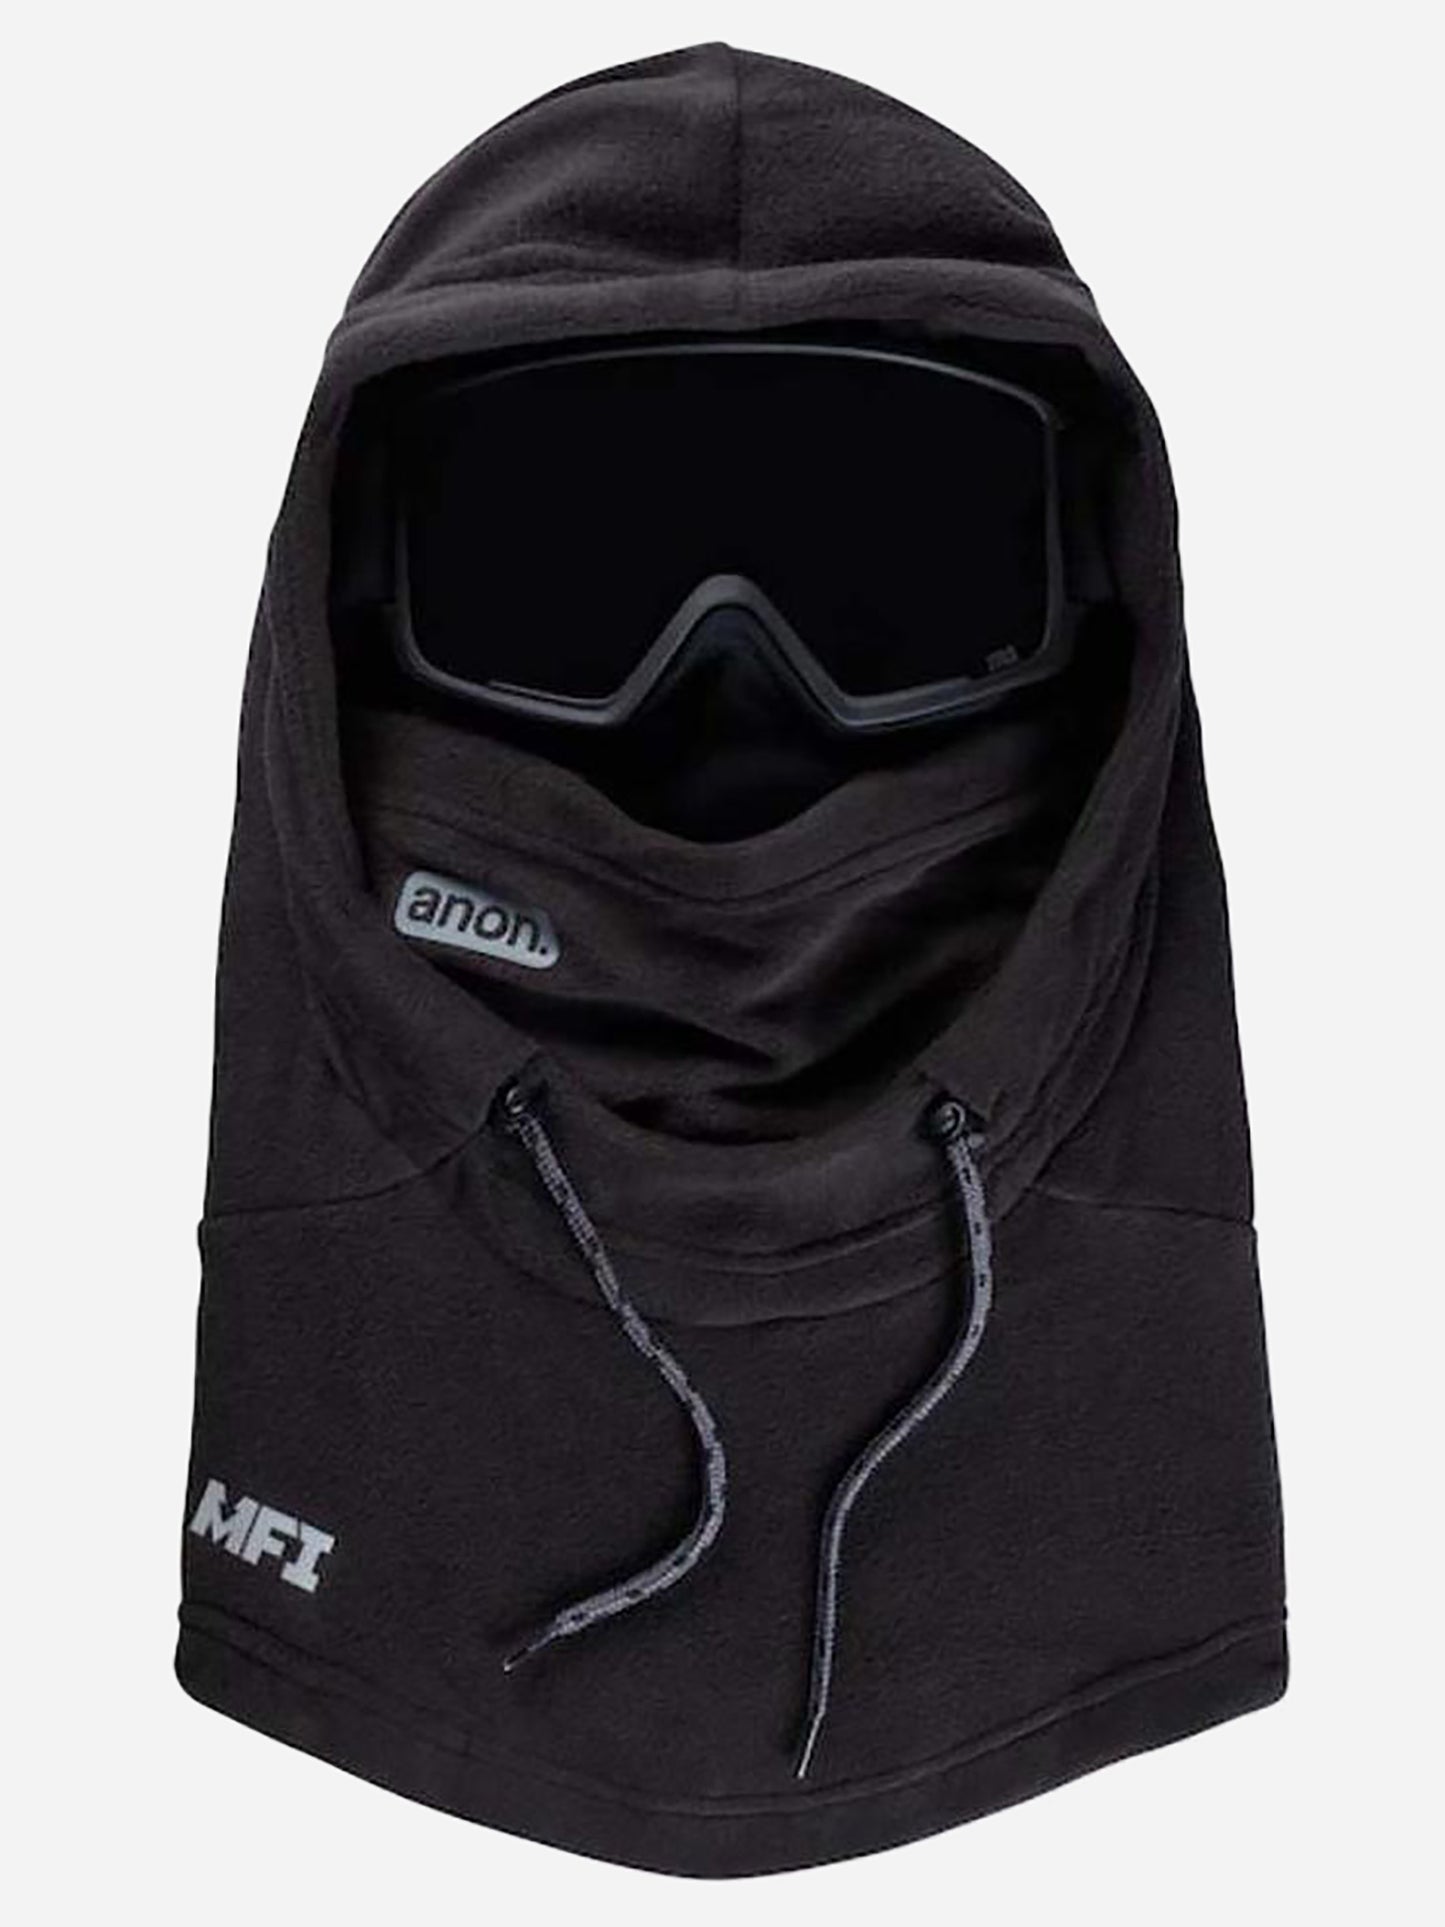 Anon MFI® Fleece Helmet Hood